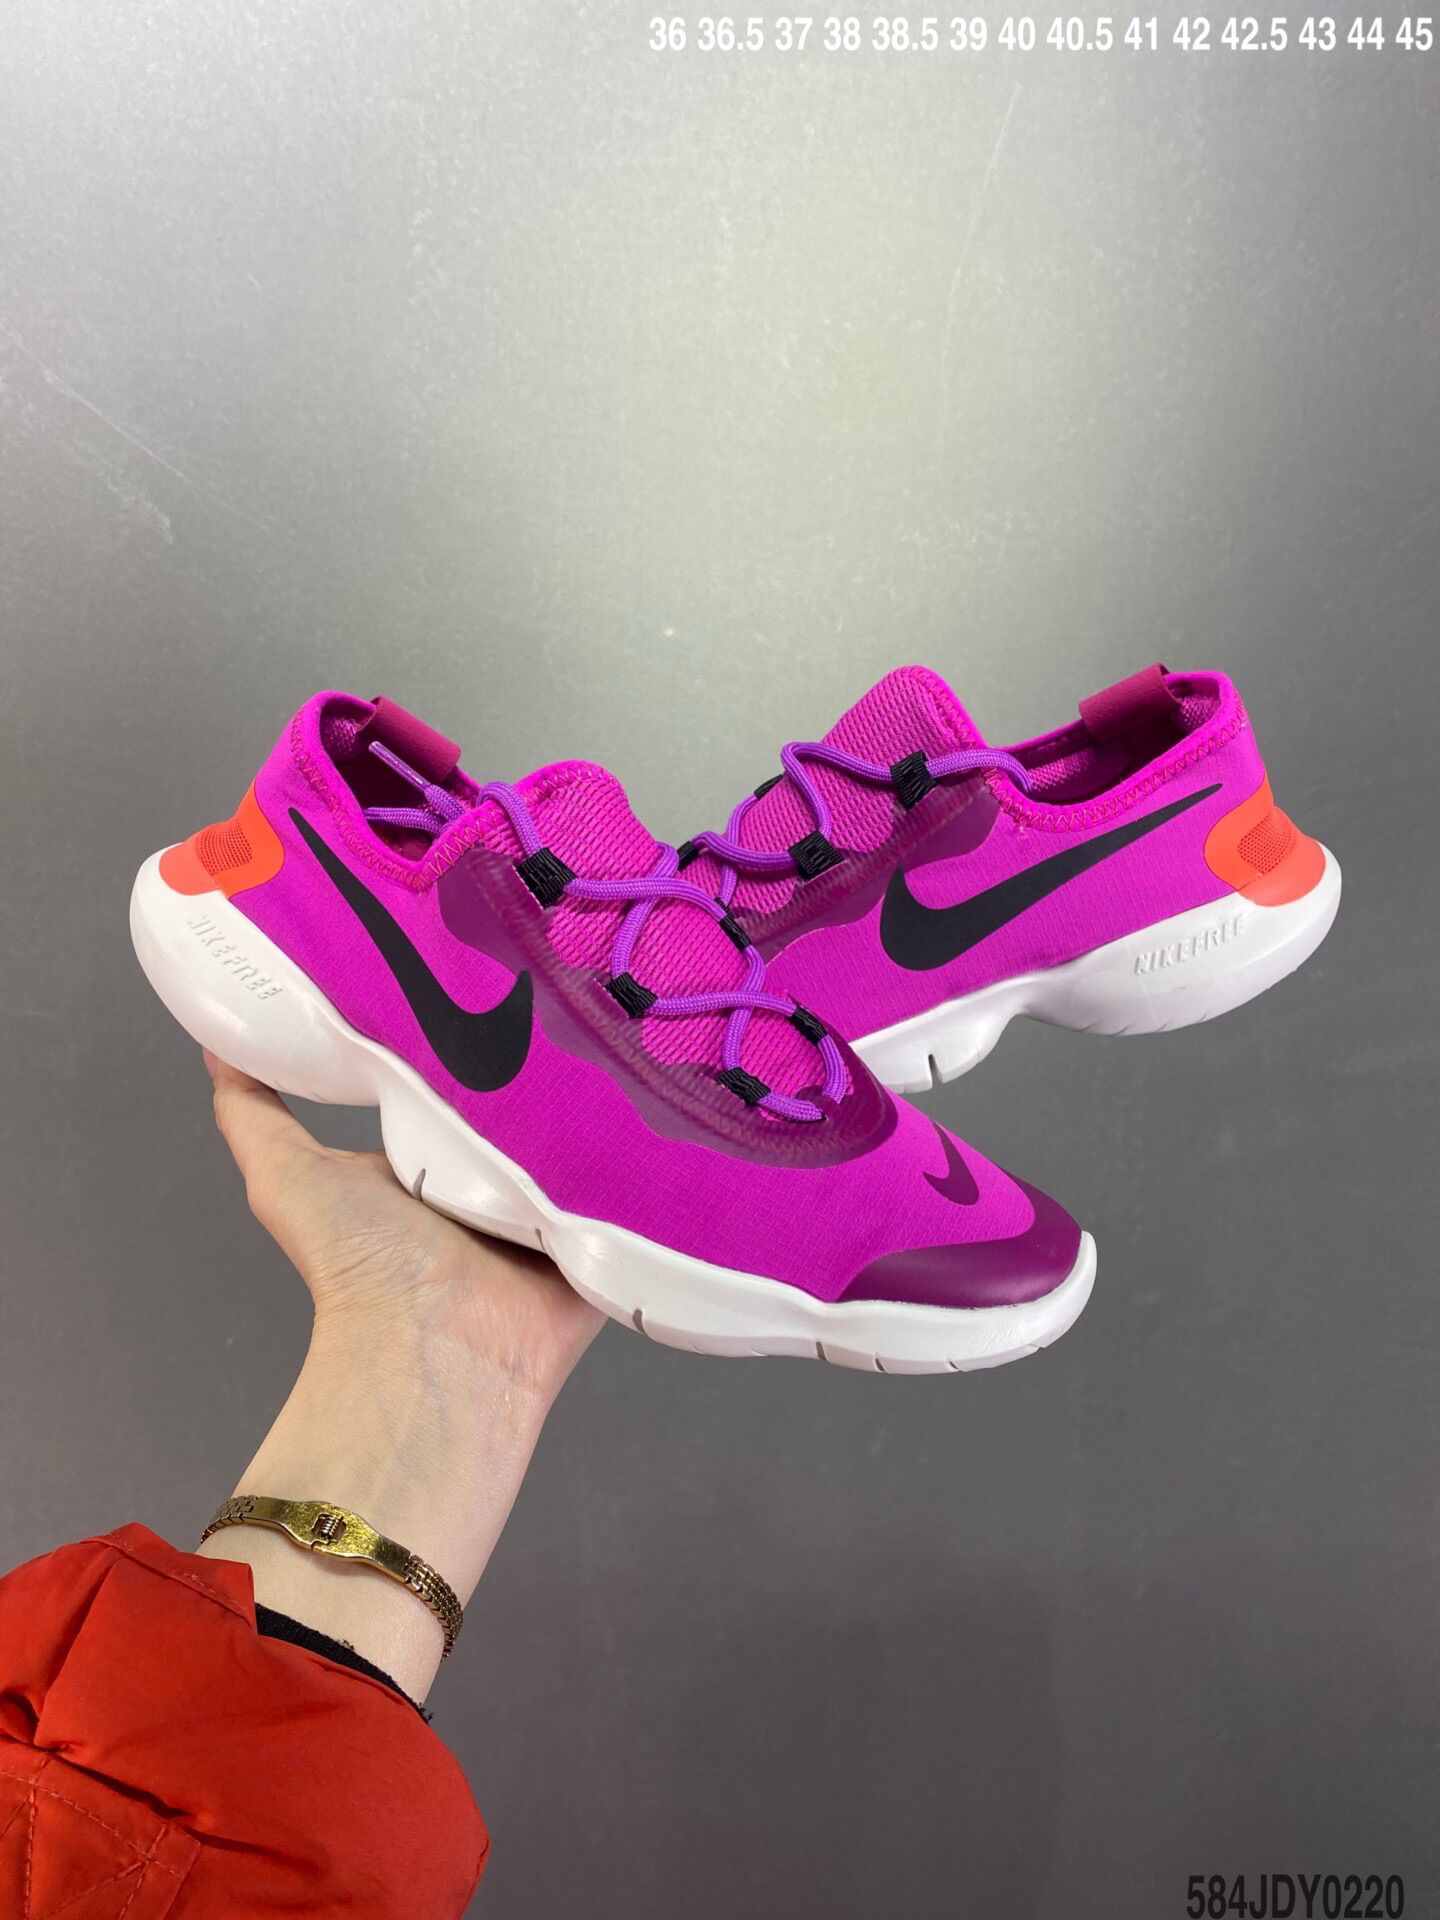 New Nike Free 2.0 Flyknit Purple Black White Shoes